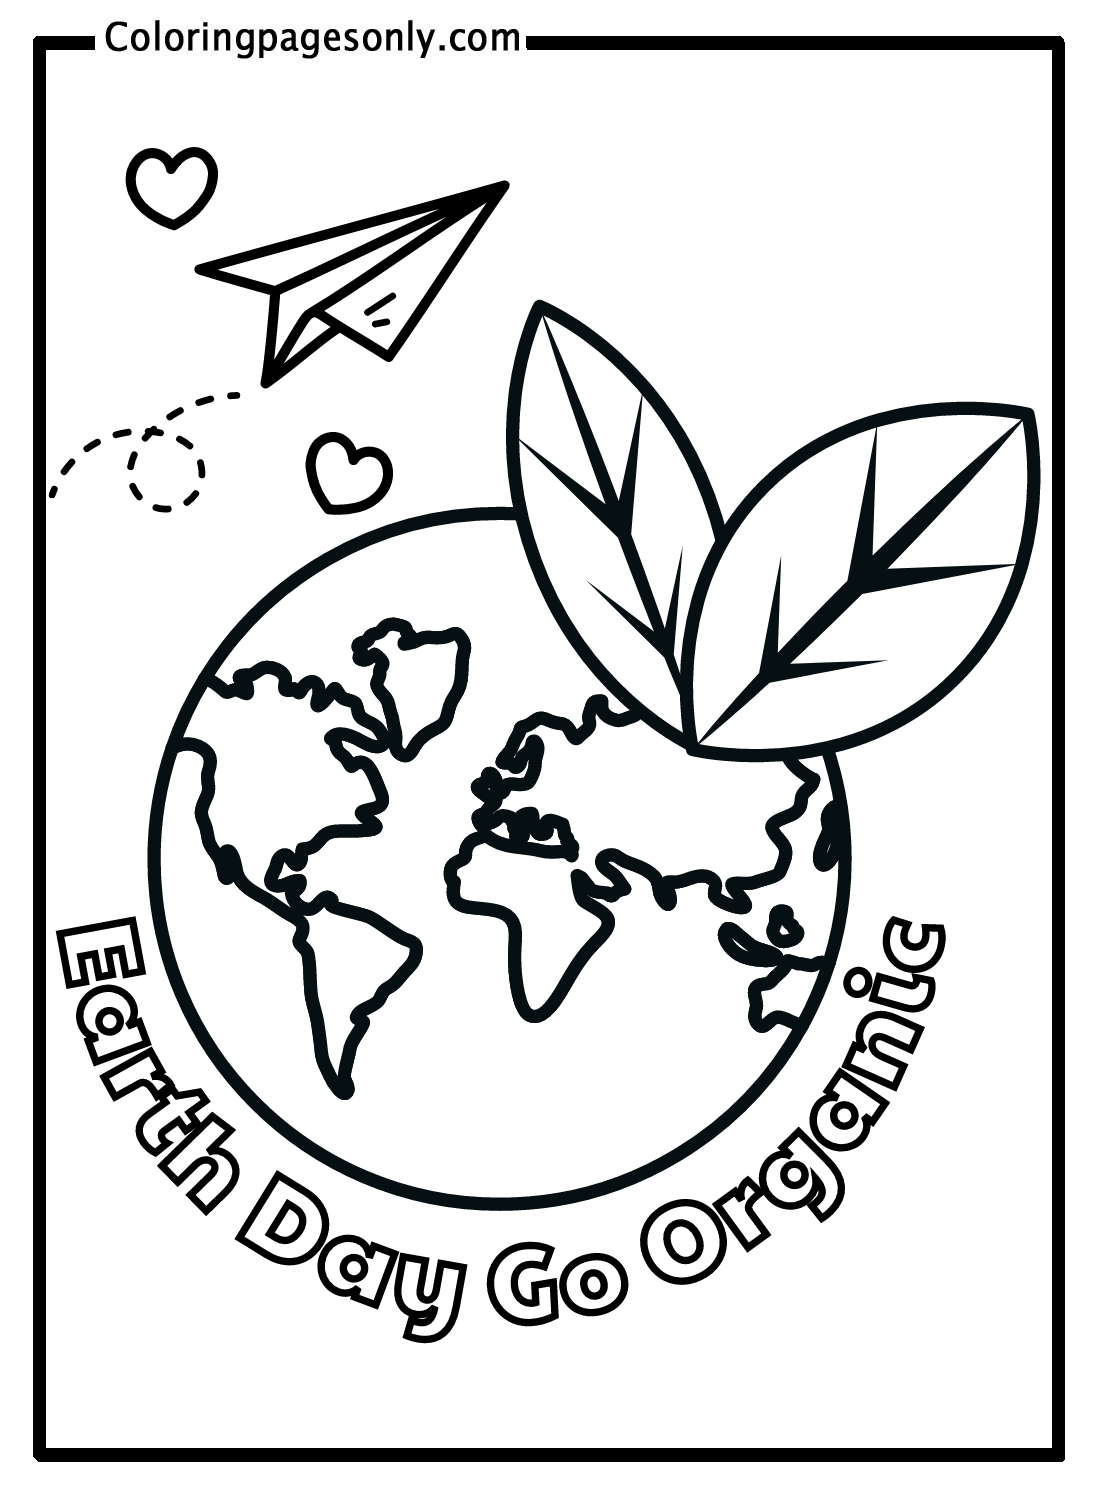 День Земли Go Organic от Дня Земли